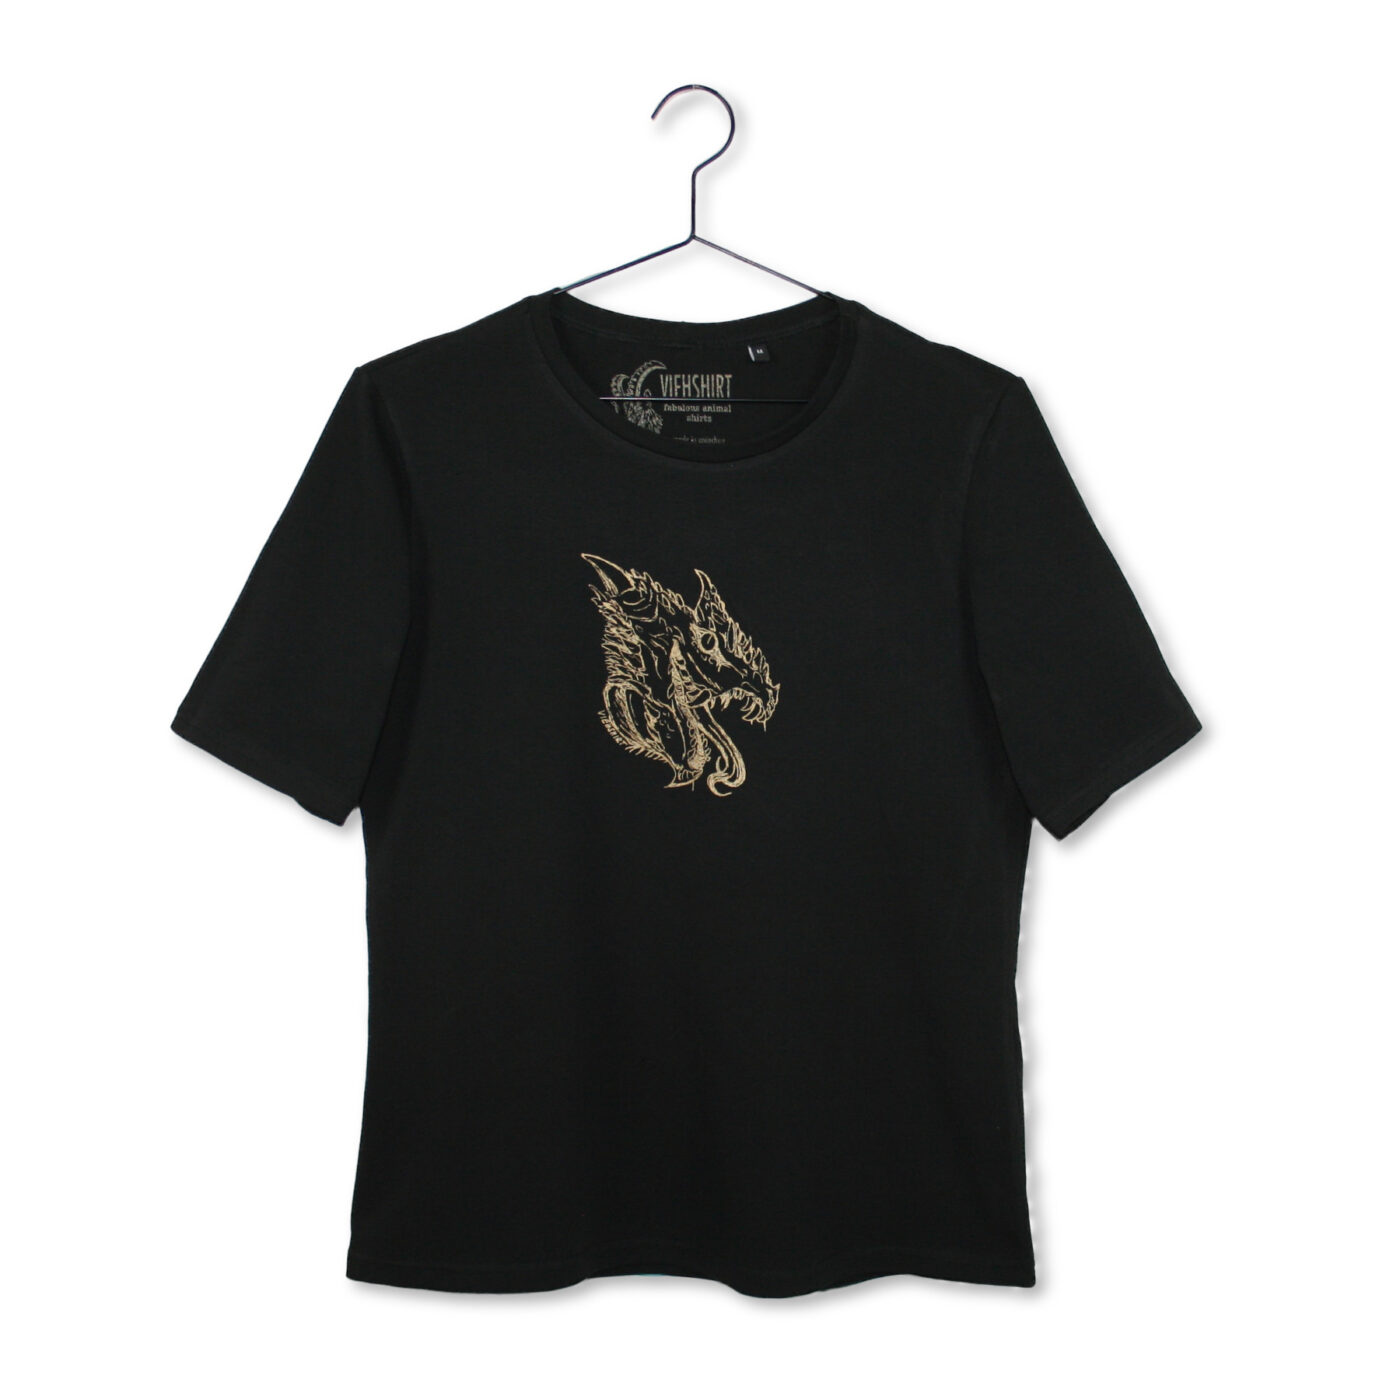 Schwarzes T-Shirt mit Siebdruckmotiv Drache